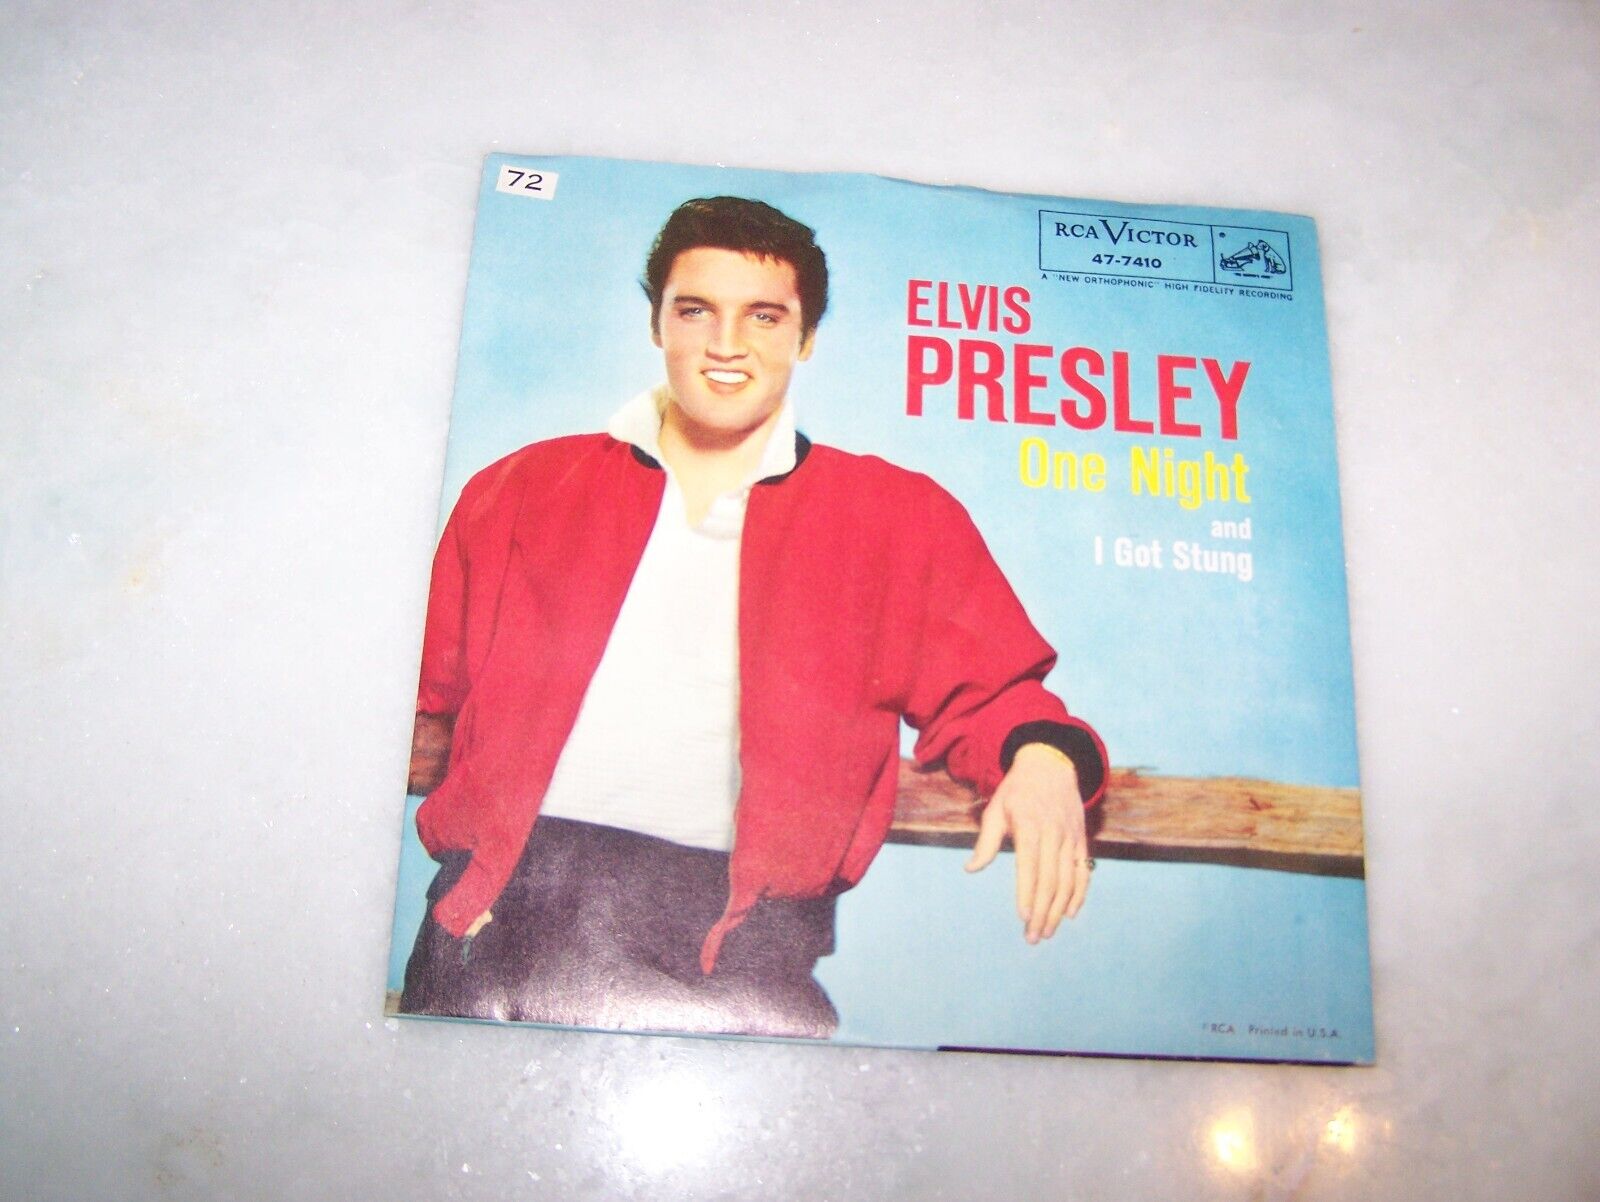 ELVIS PRESLEY One Night / I Got Stung 1958 45 record